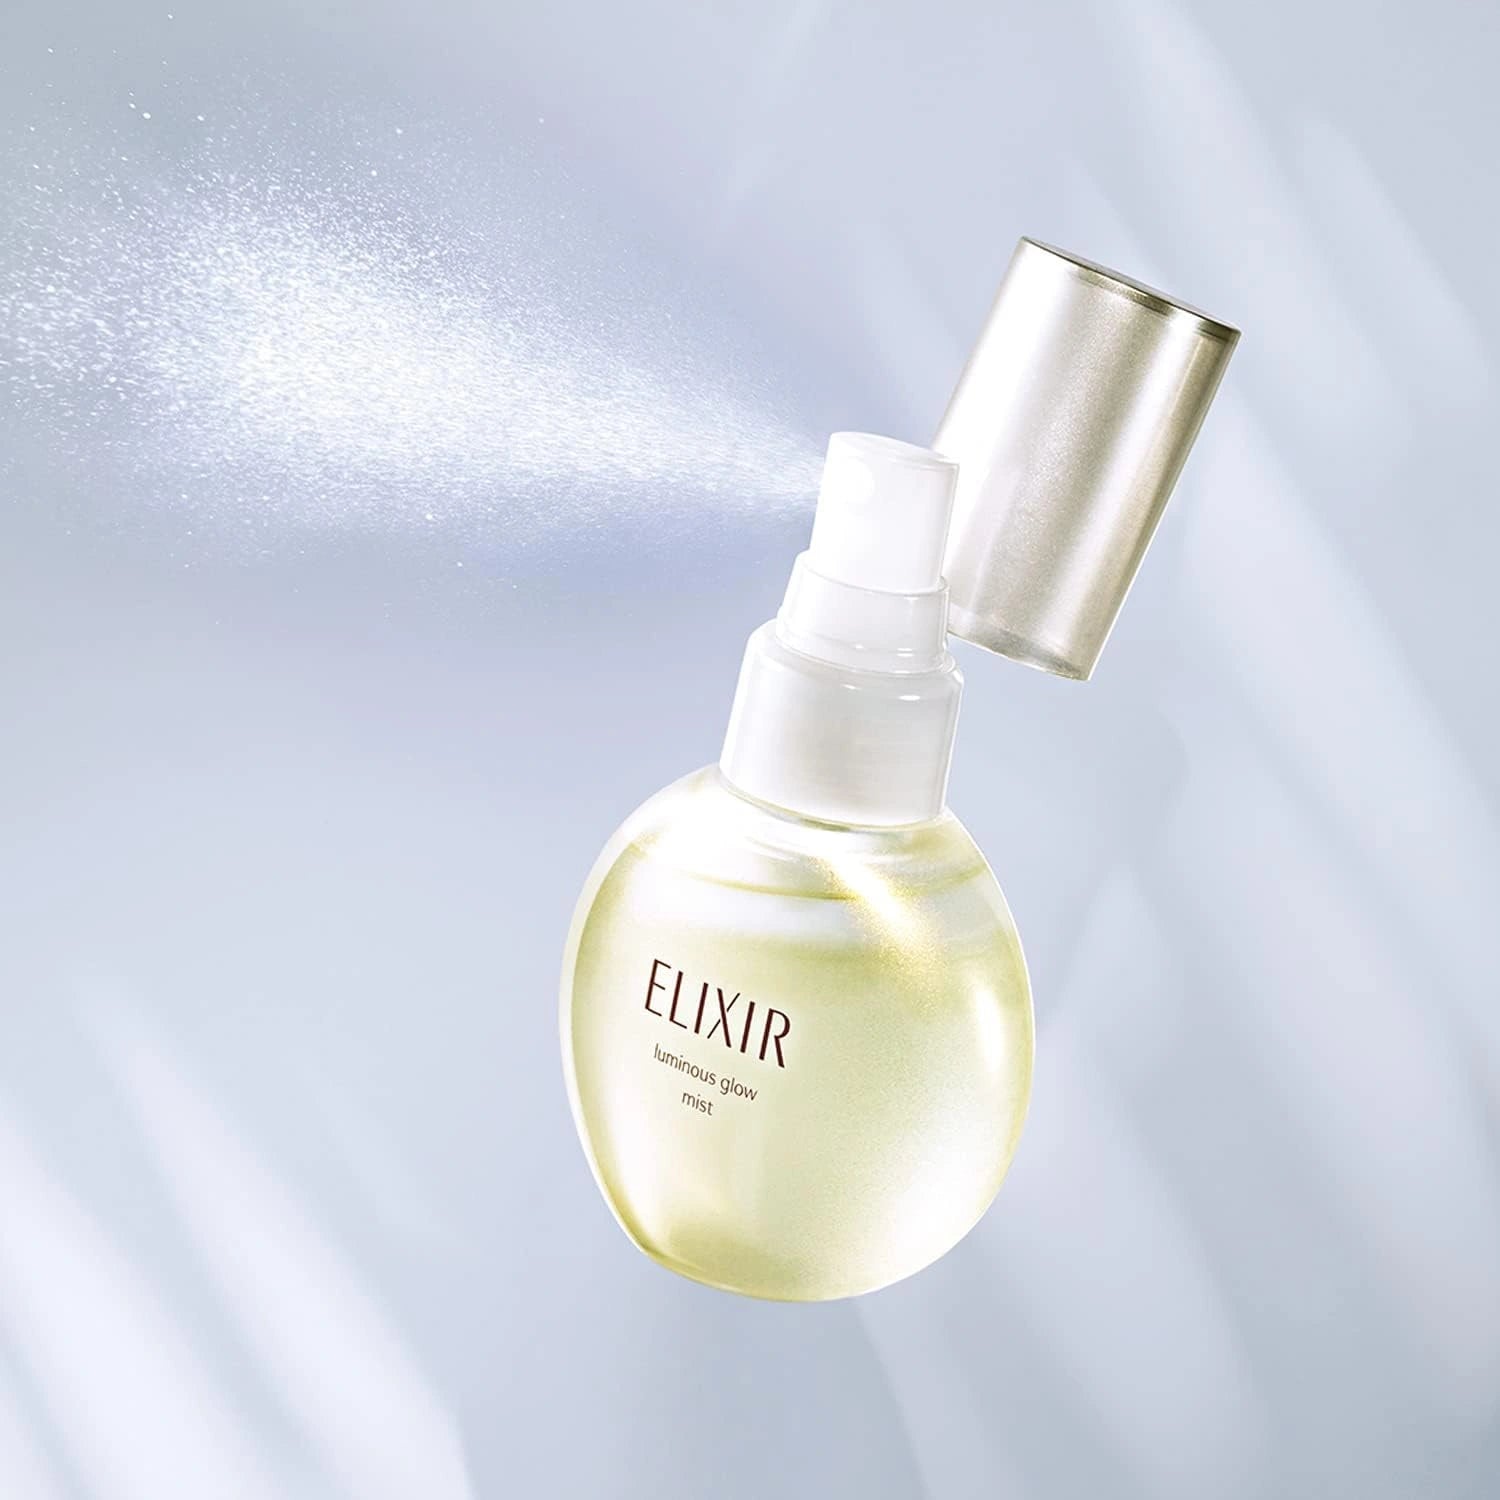 Shiseido Elixir Luminous Glow Mist 80ml - Buy Me Japan